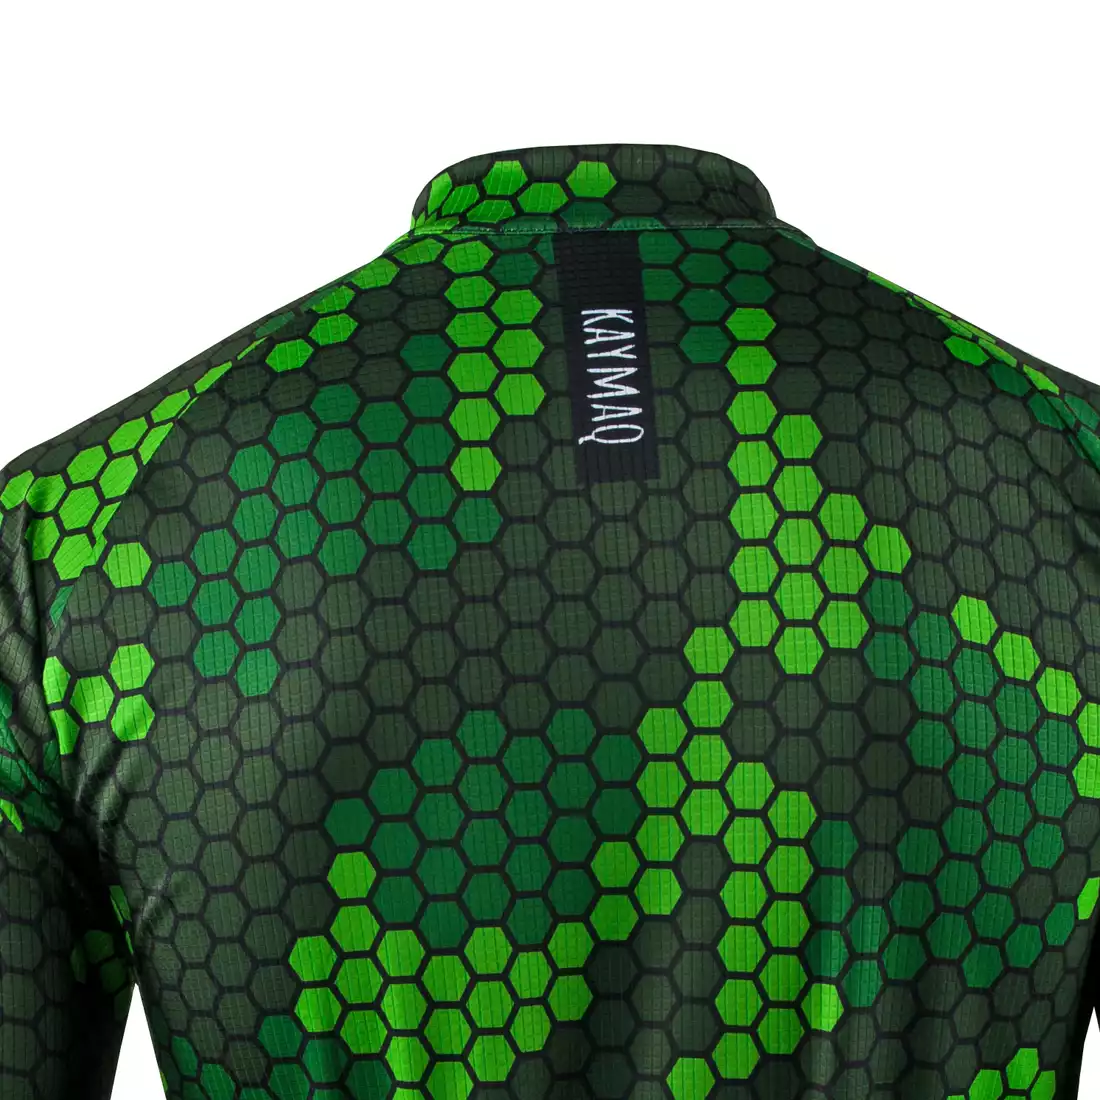 KAYMAQ DESIGN M62 męska bluza rowerowa zielony